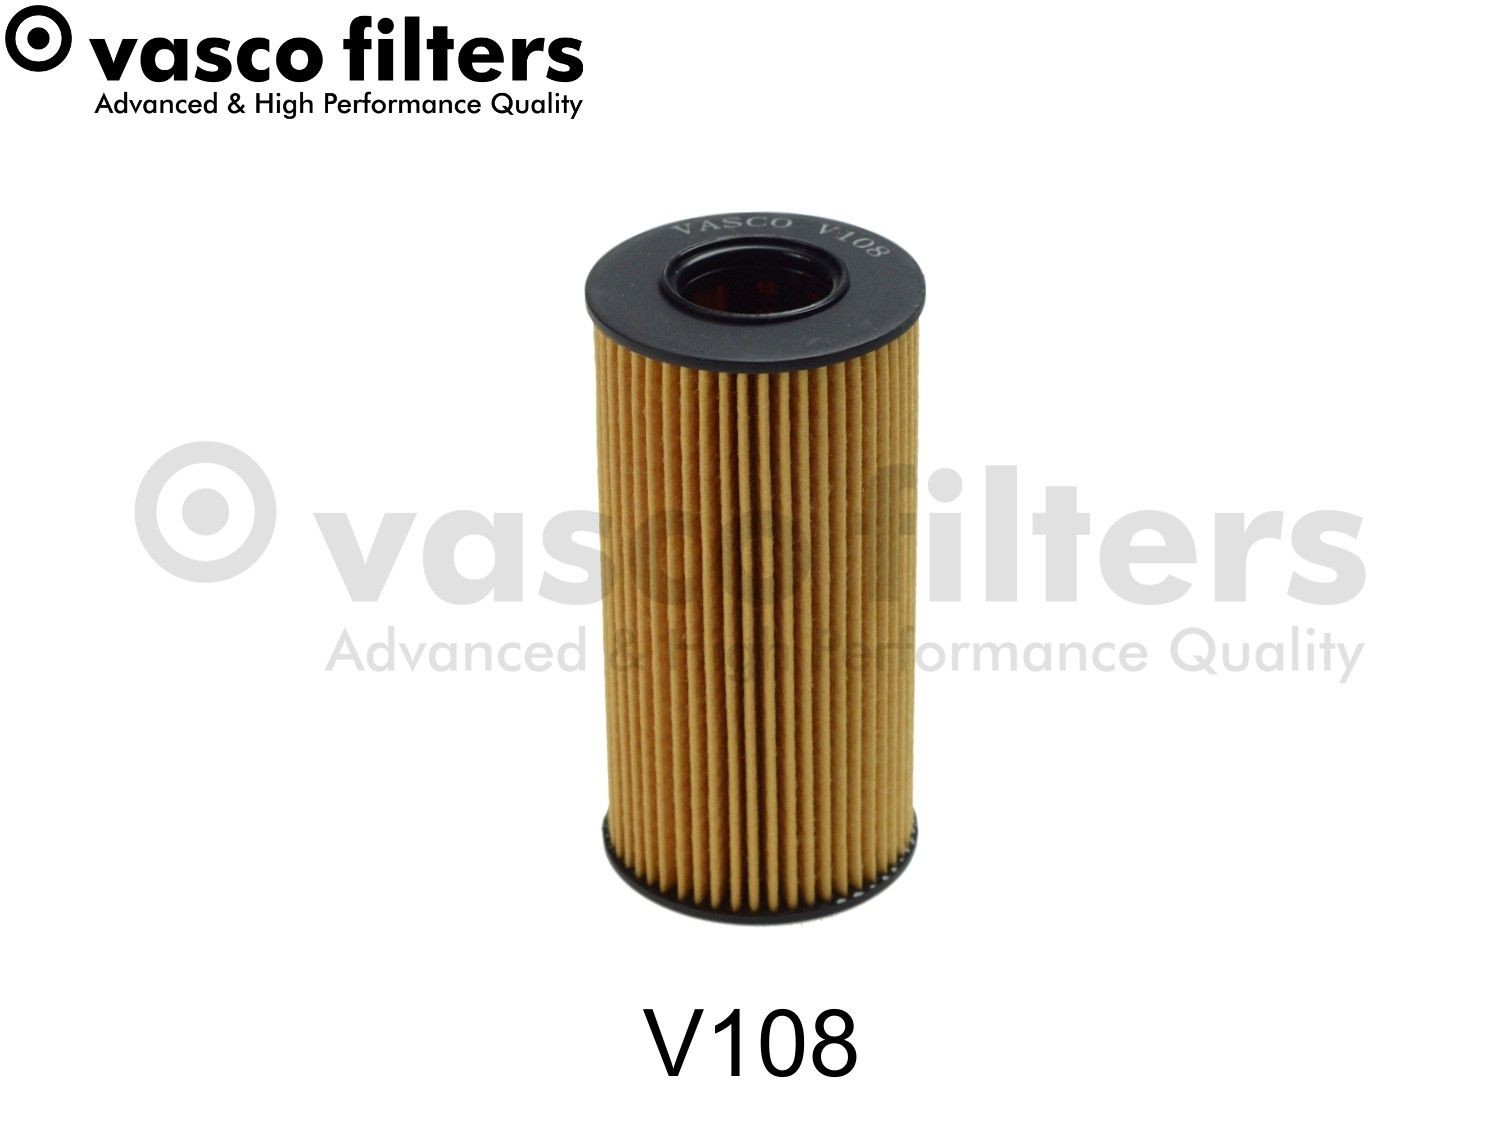 Original DAVID VASCO Oil filters V108 for RENAULT CLIO